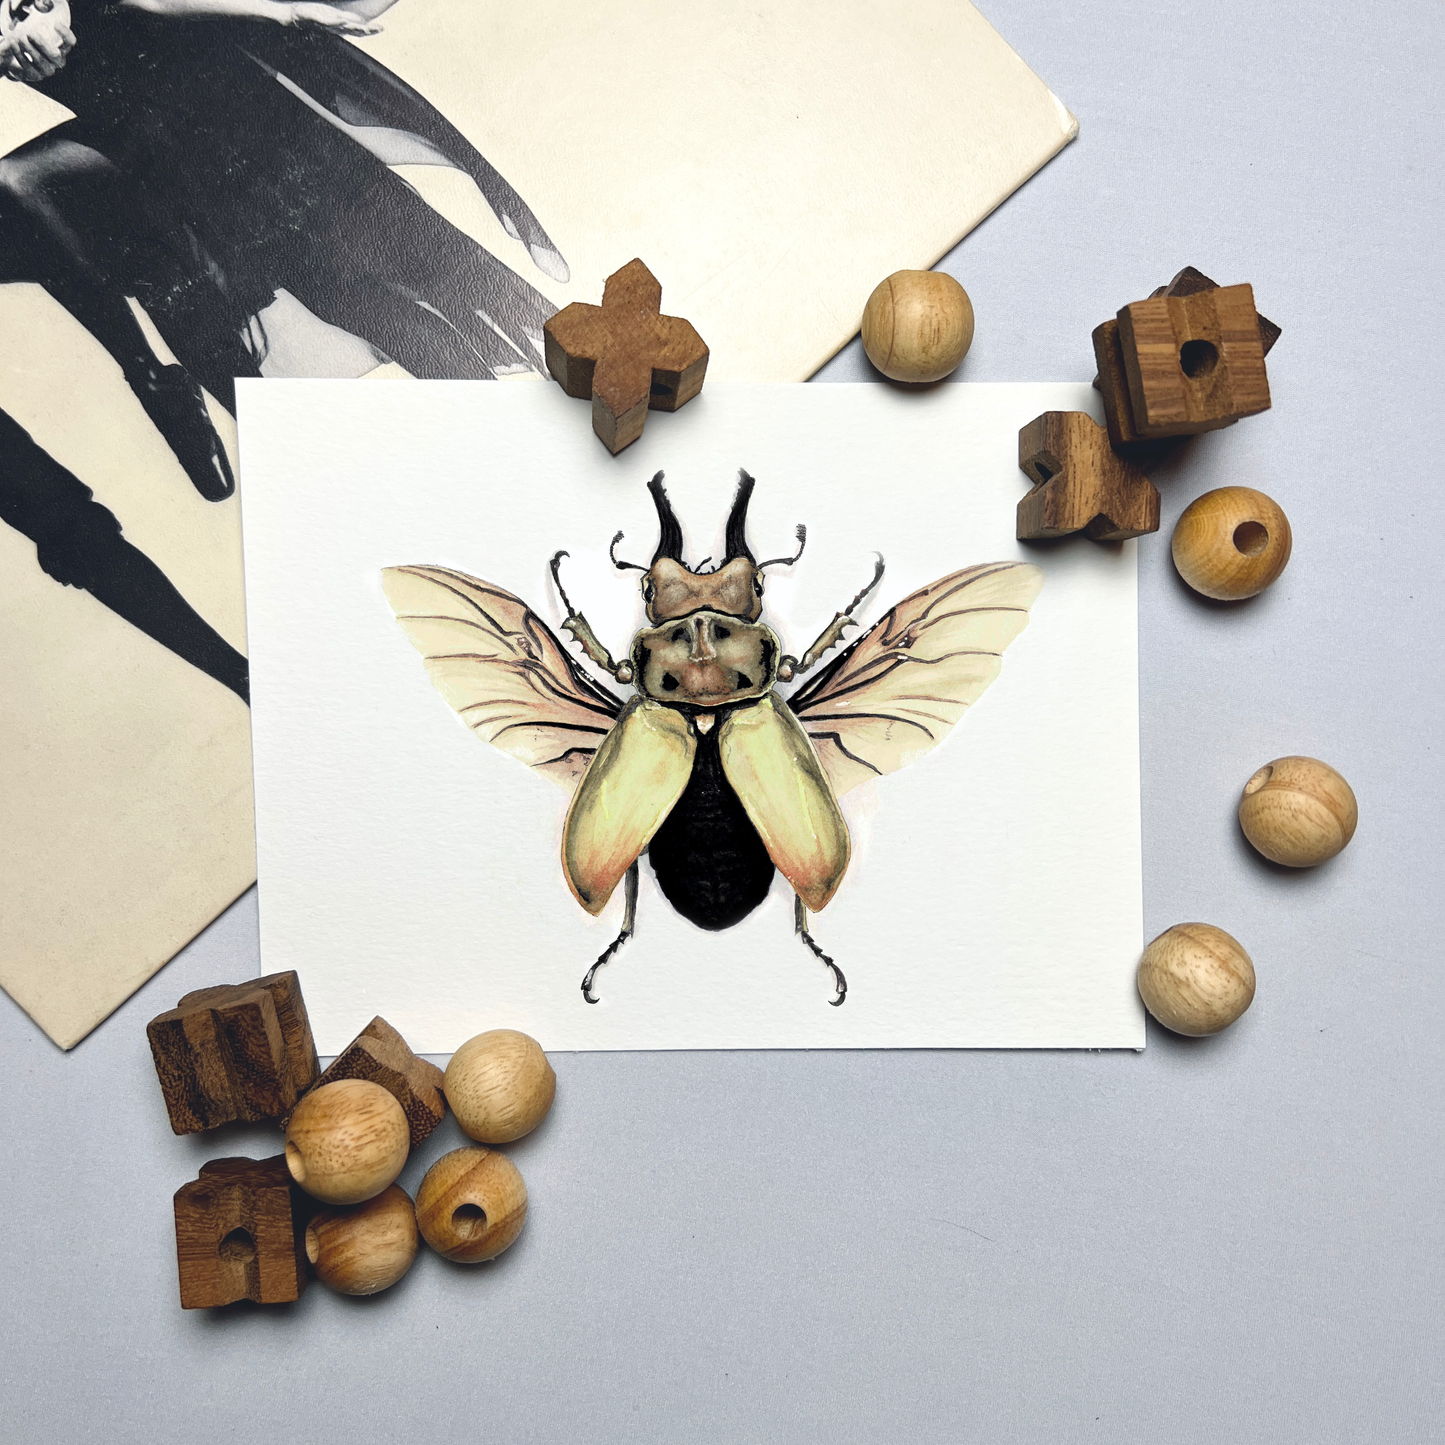 Stag Beetle Art Print - Augustus